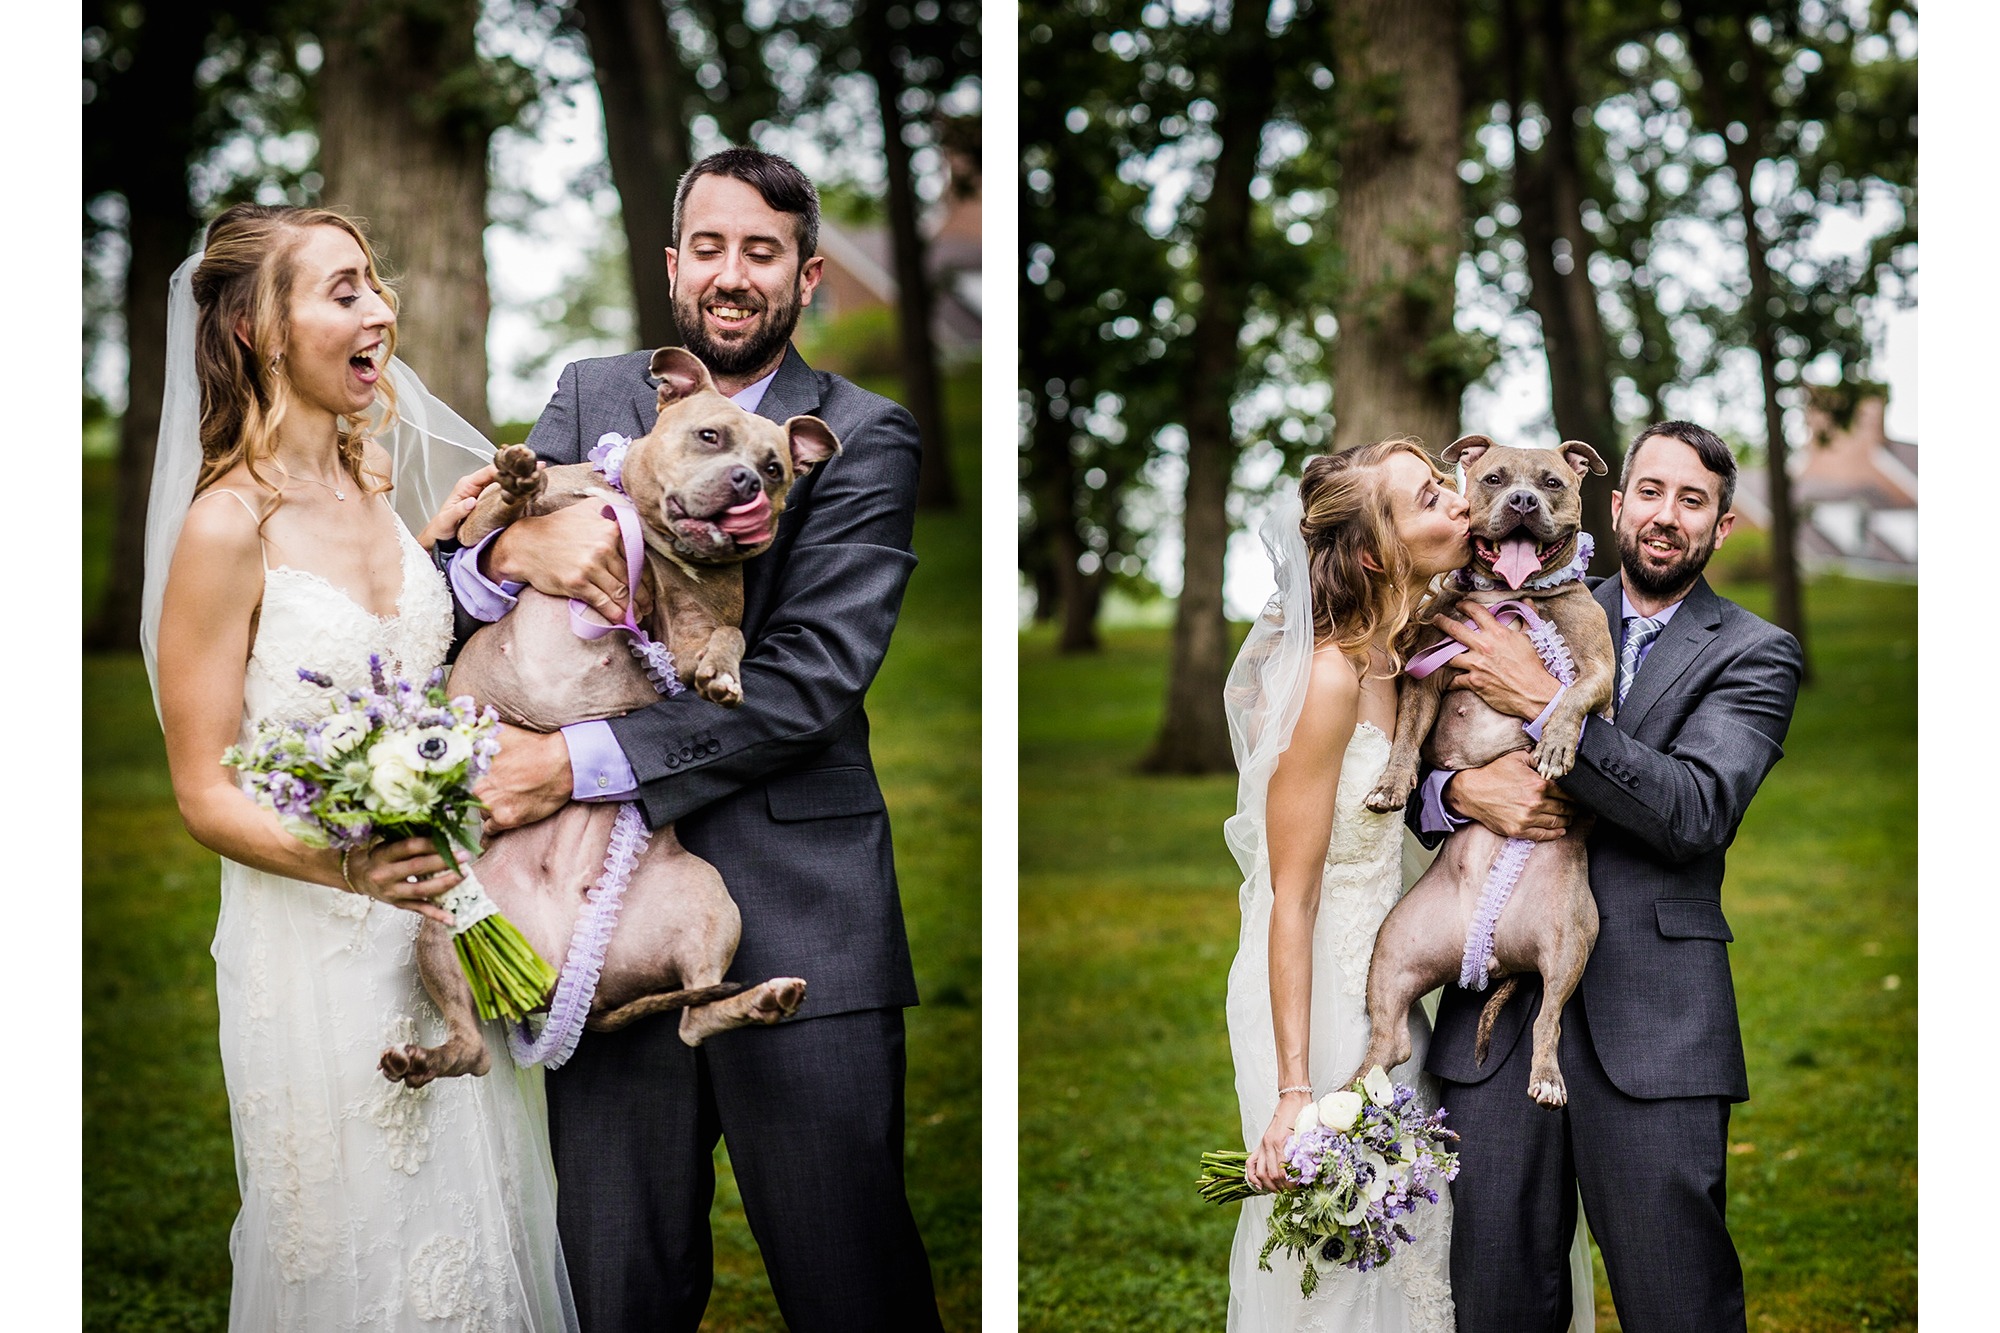 Wedding portraits with a dog at a Katherine Legge Memorial Lodge wedding